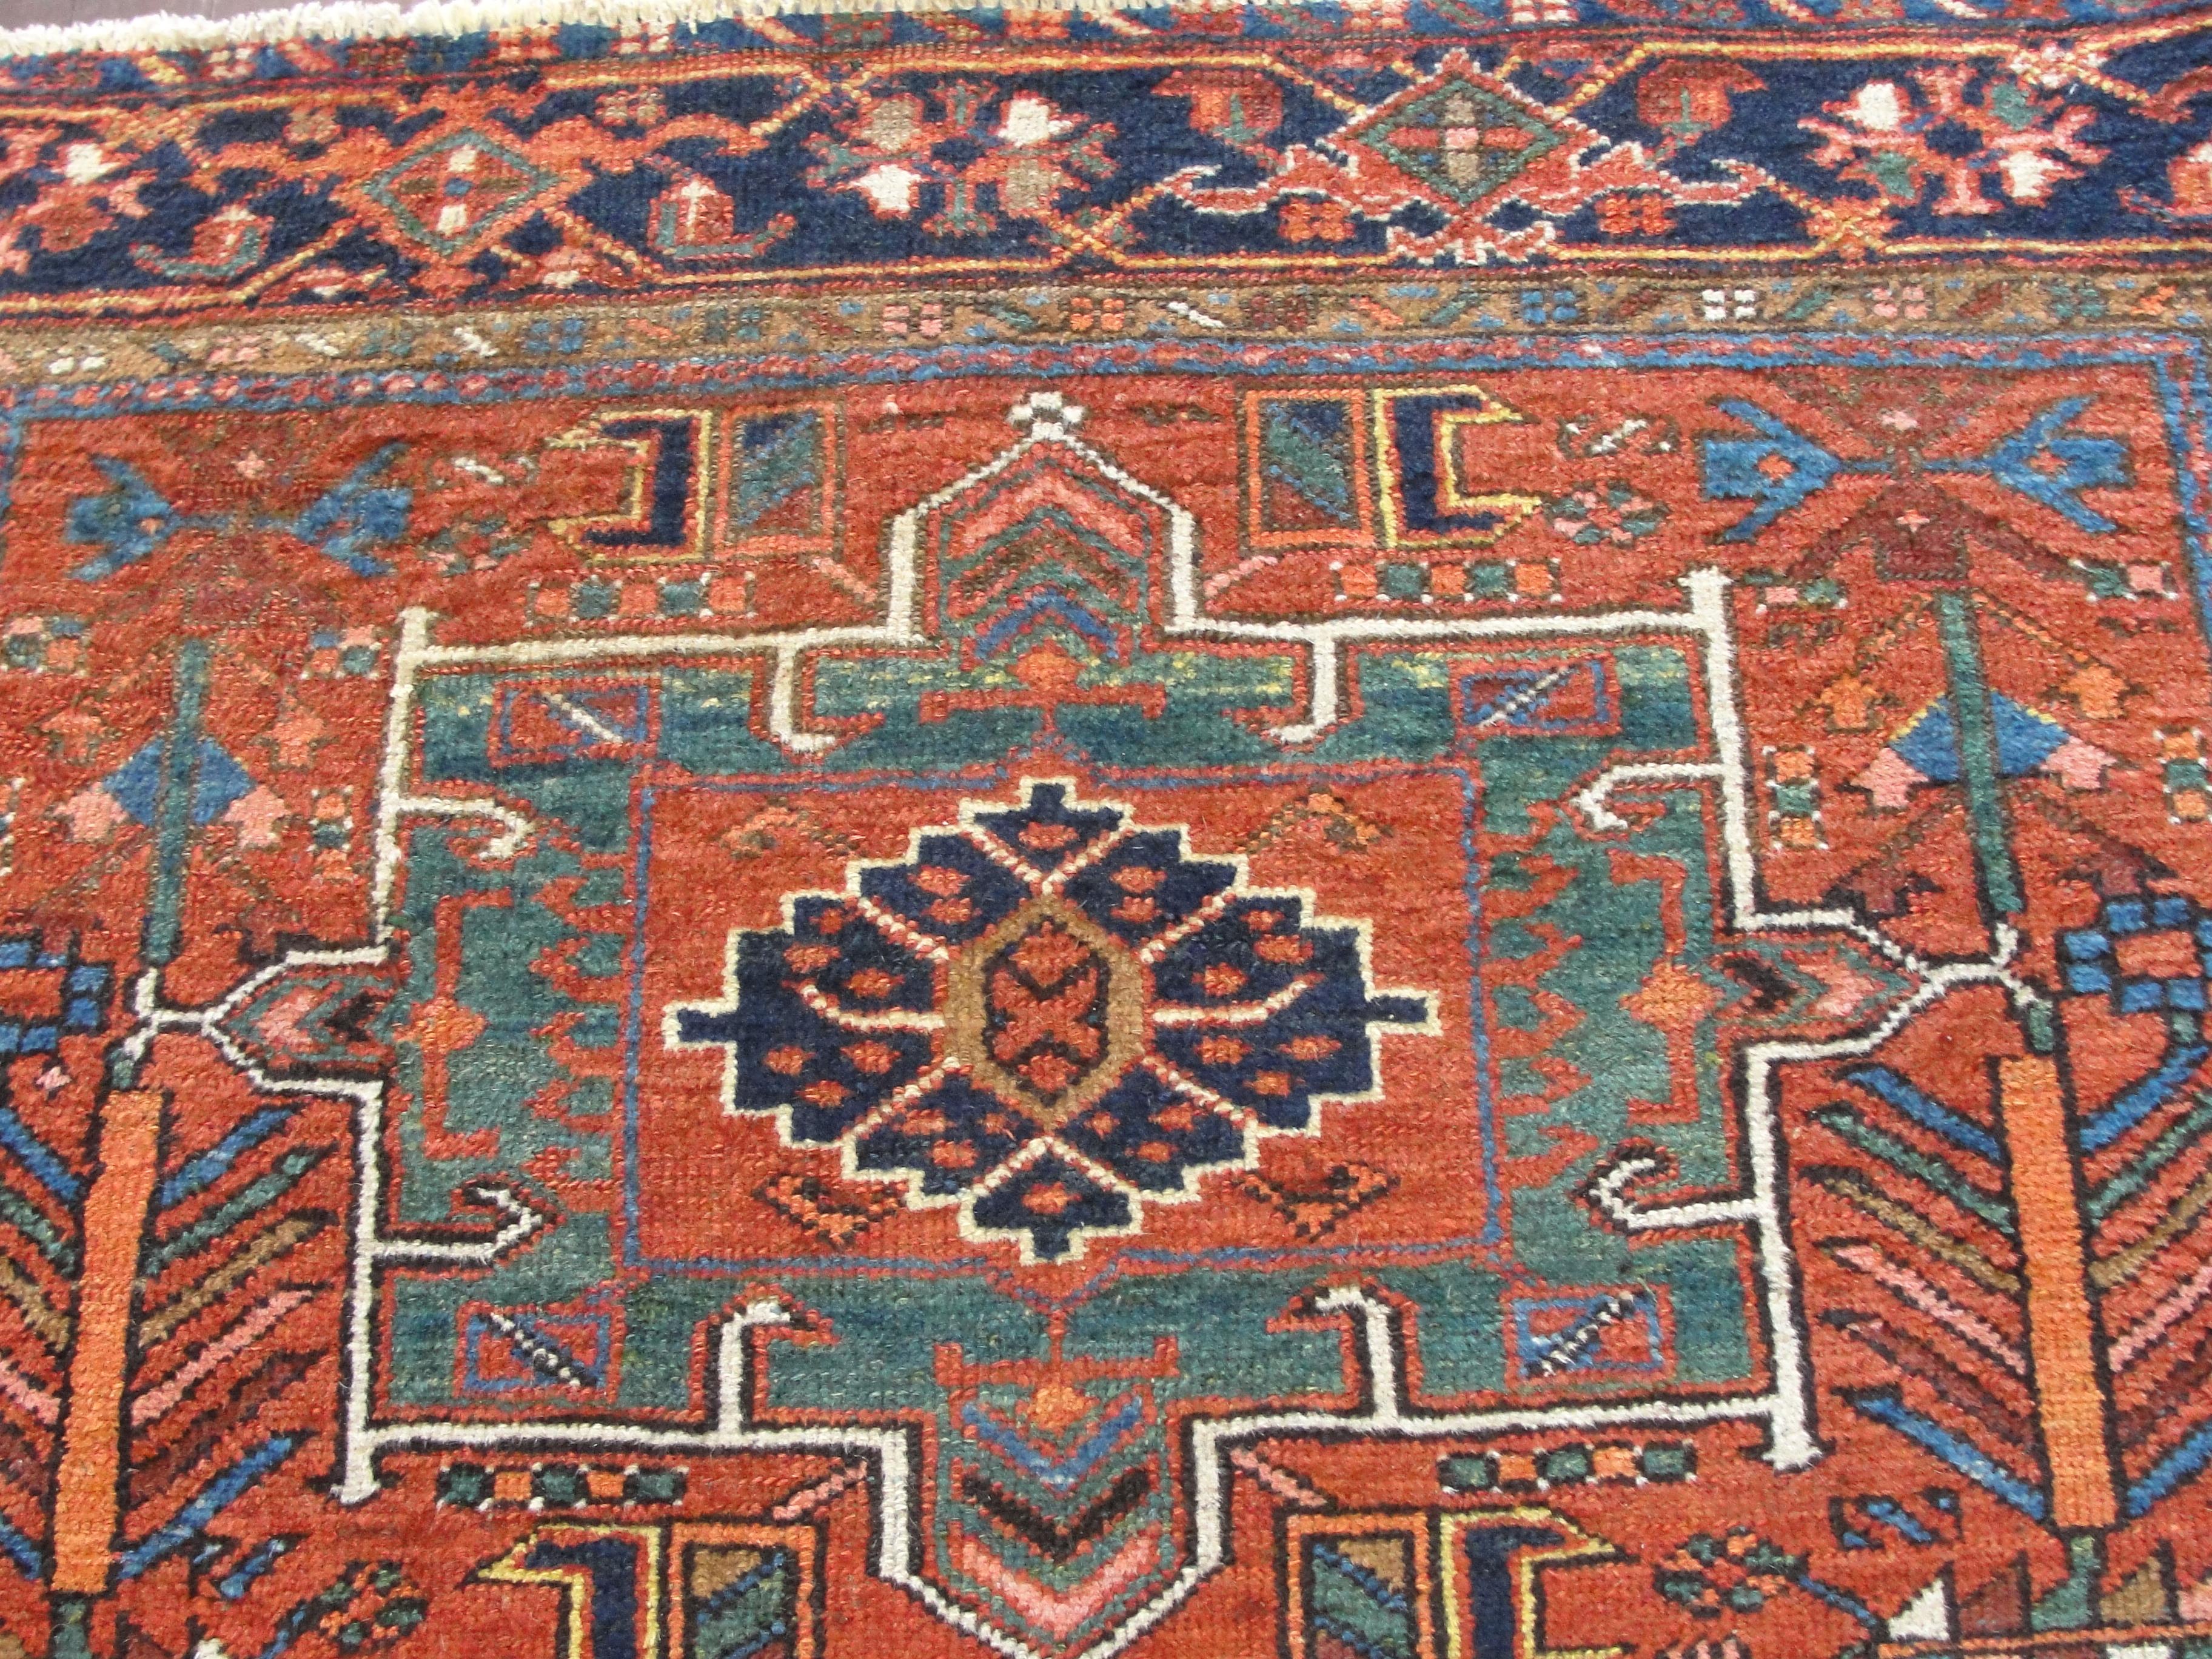 Hand-Woven  Antique Persian Karajah Rug, Amazing colors.